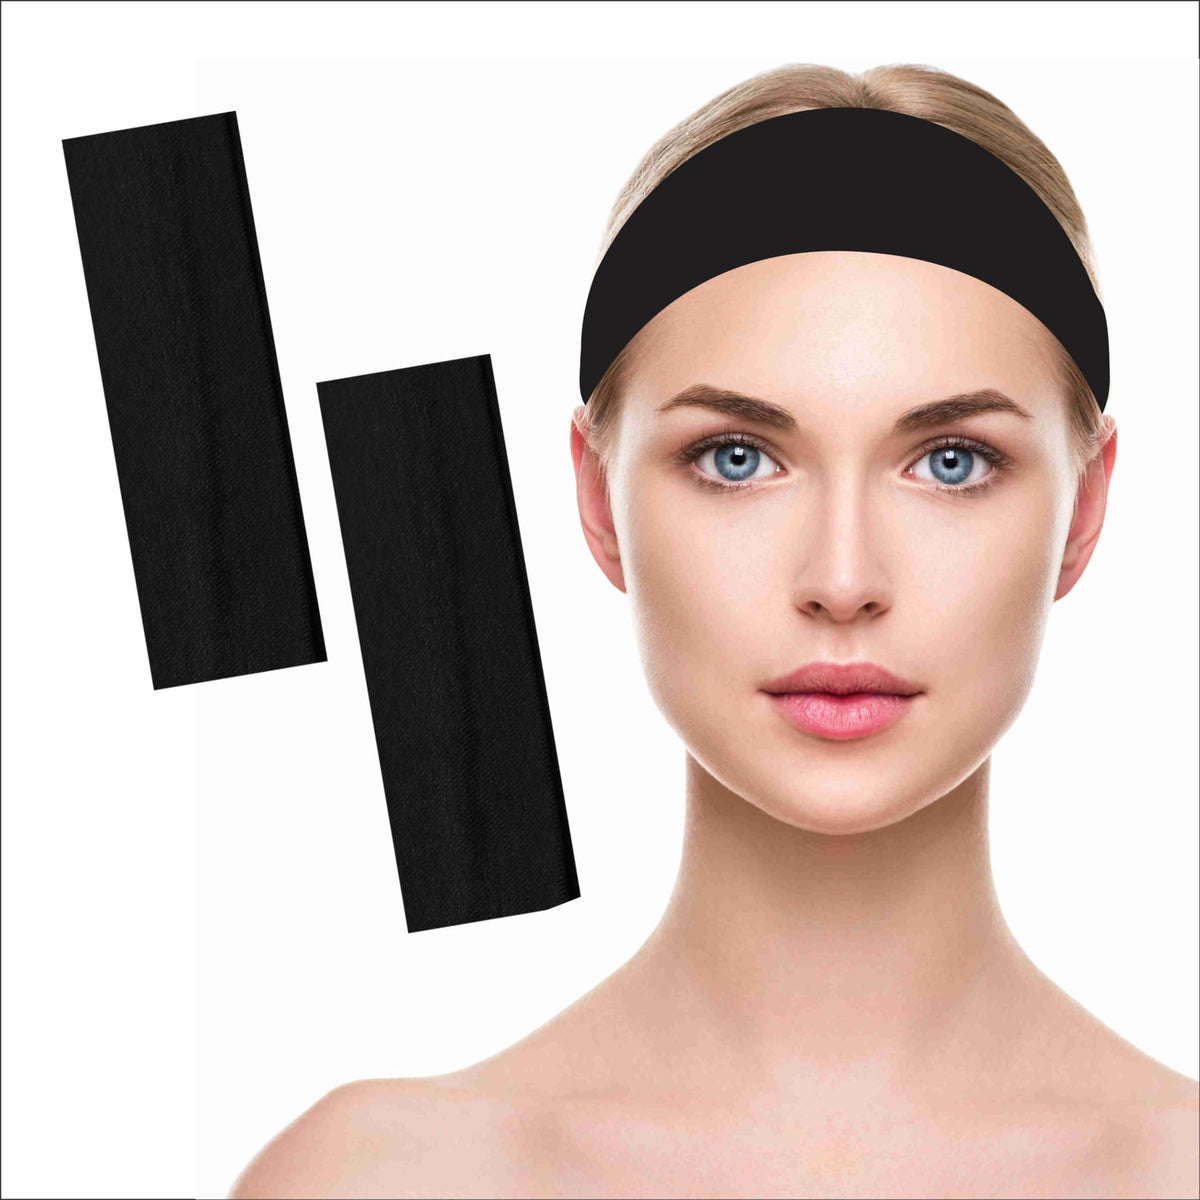 2 x Versatile 7cm black headband for Women | Nonslip head band | Comfort headband for Makeup Workout and Yoga | headbands for women's hair | makeup headband